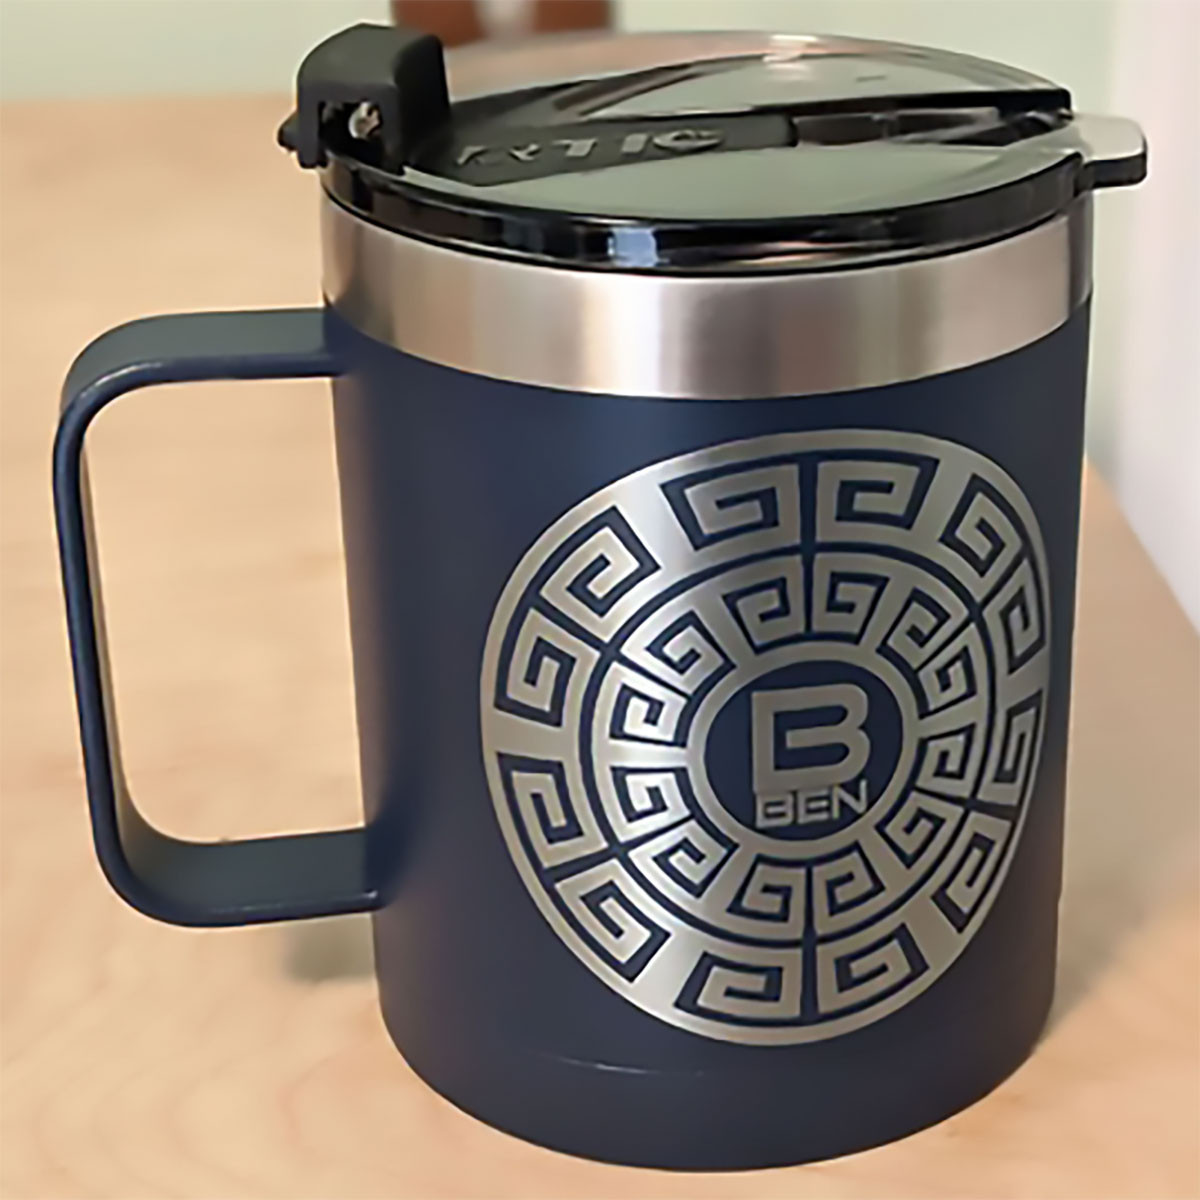 RTIC Custom Laser Engraved 12oz Travel Coffee Mug - Navy - Drinkware